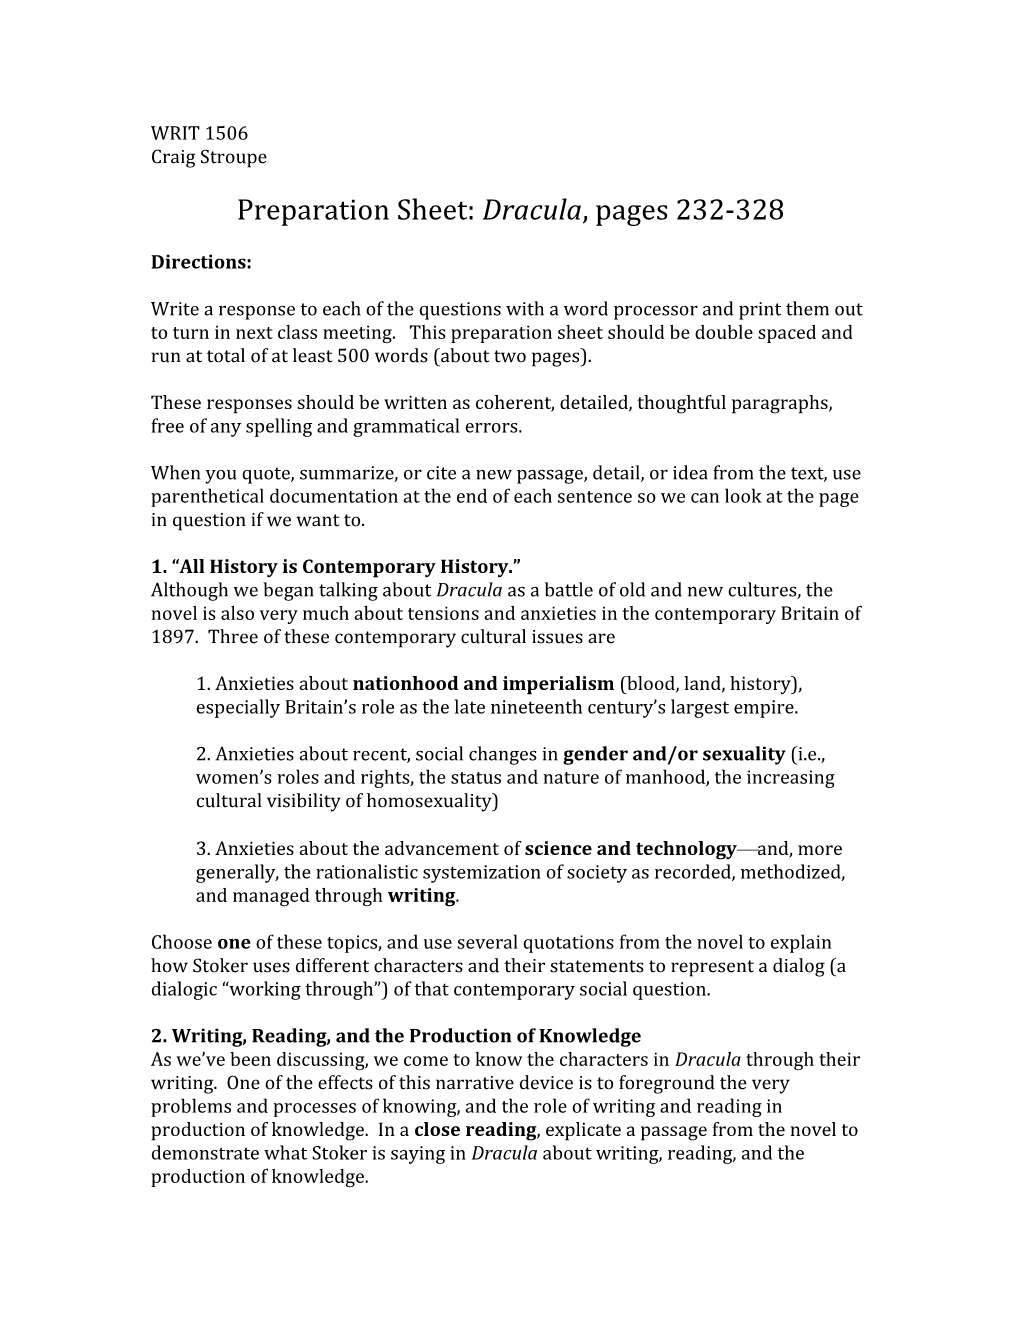 Preparation Sheet: Dracula, Pages 232-328